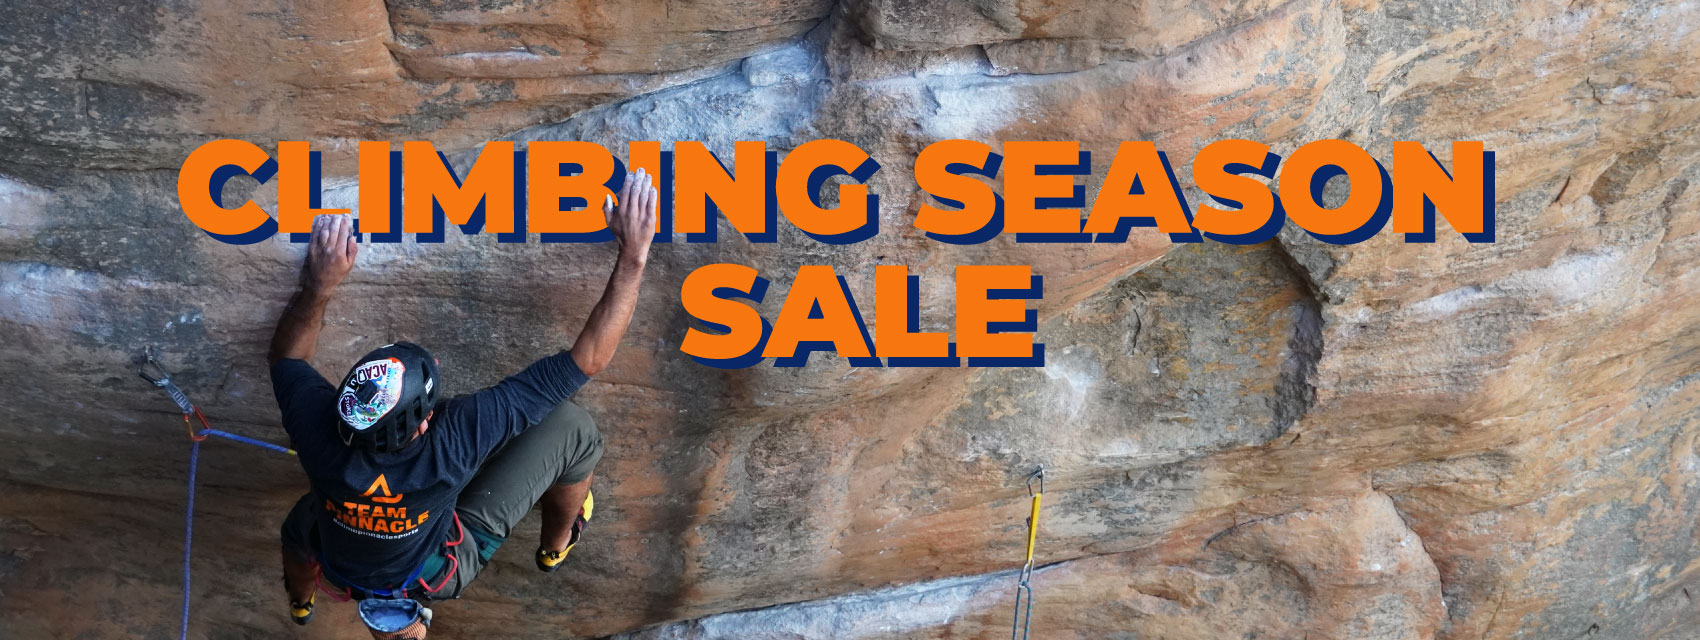 Climbing Season Sale 24